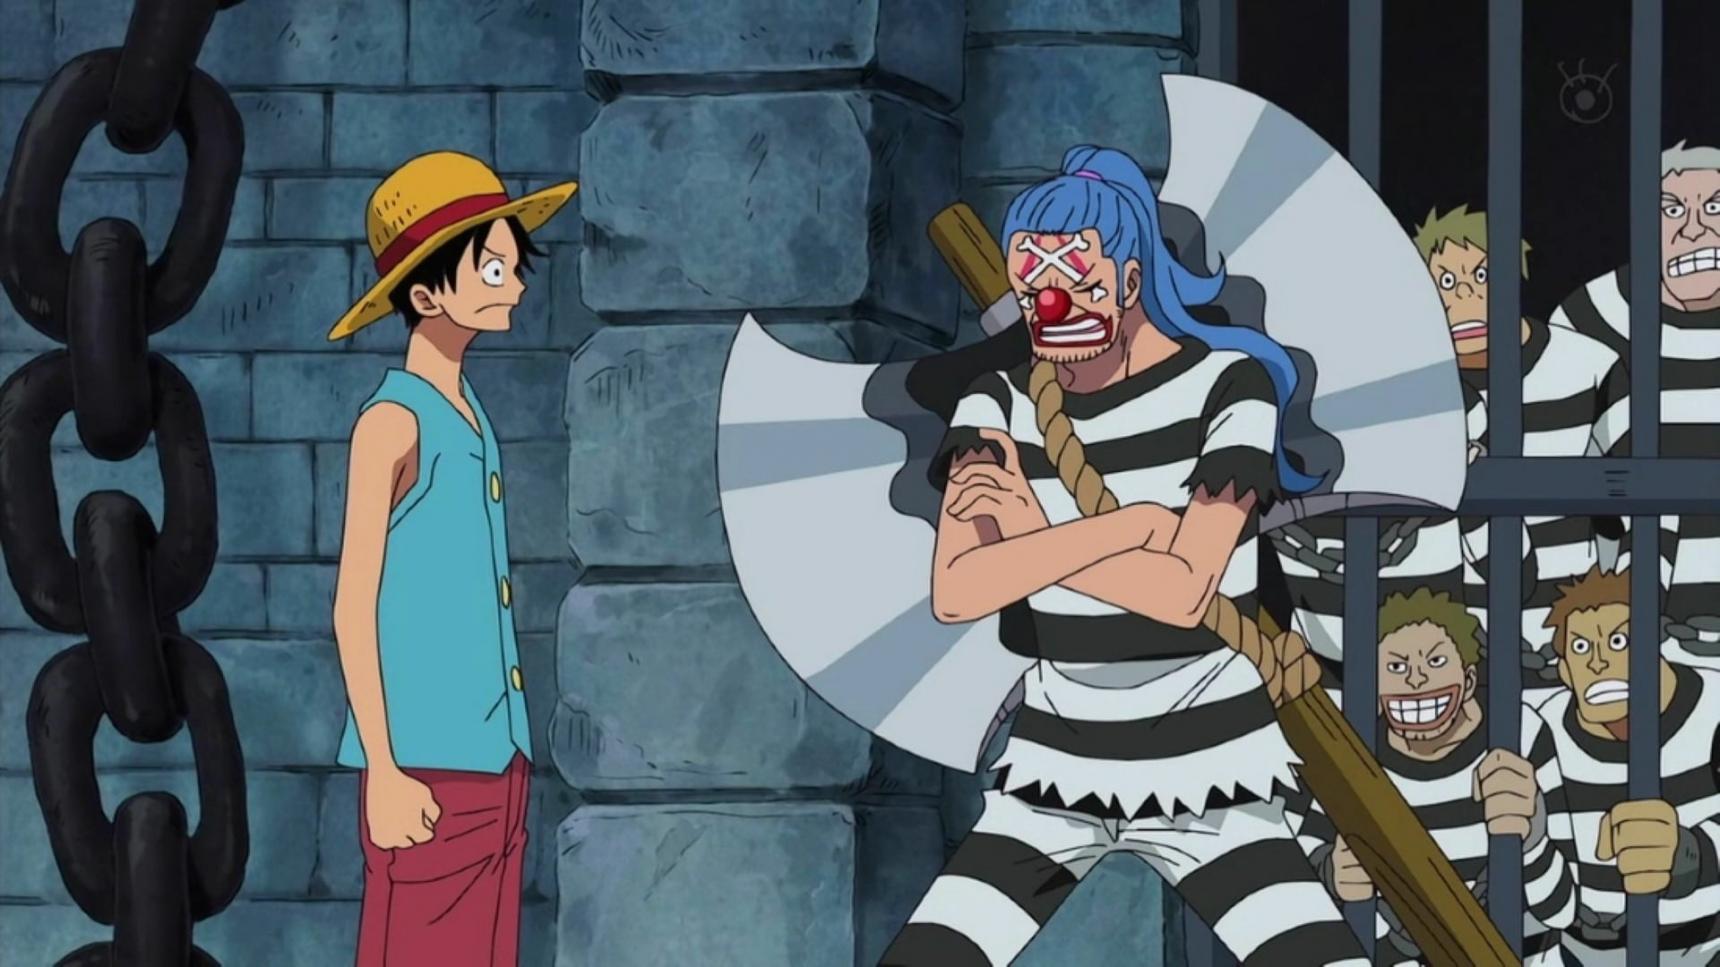 Poster del episodio 424 de One Piece online